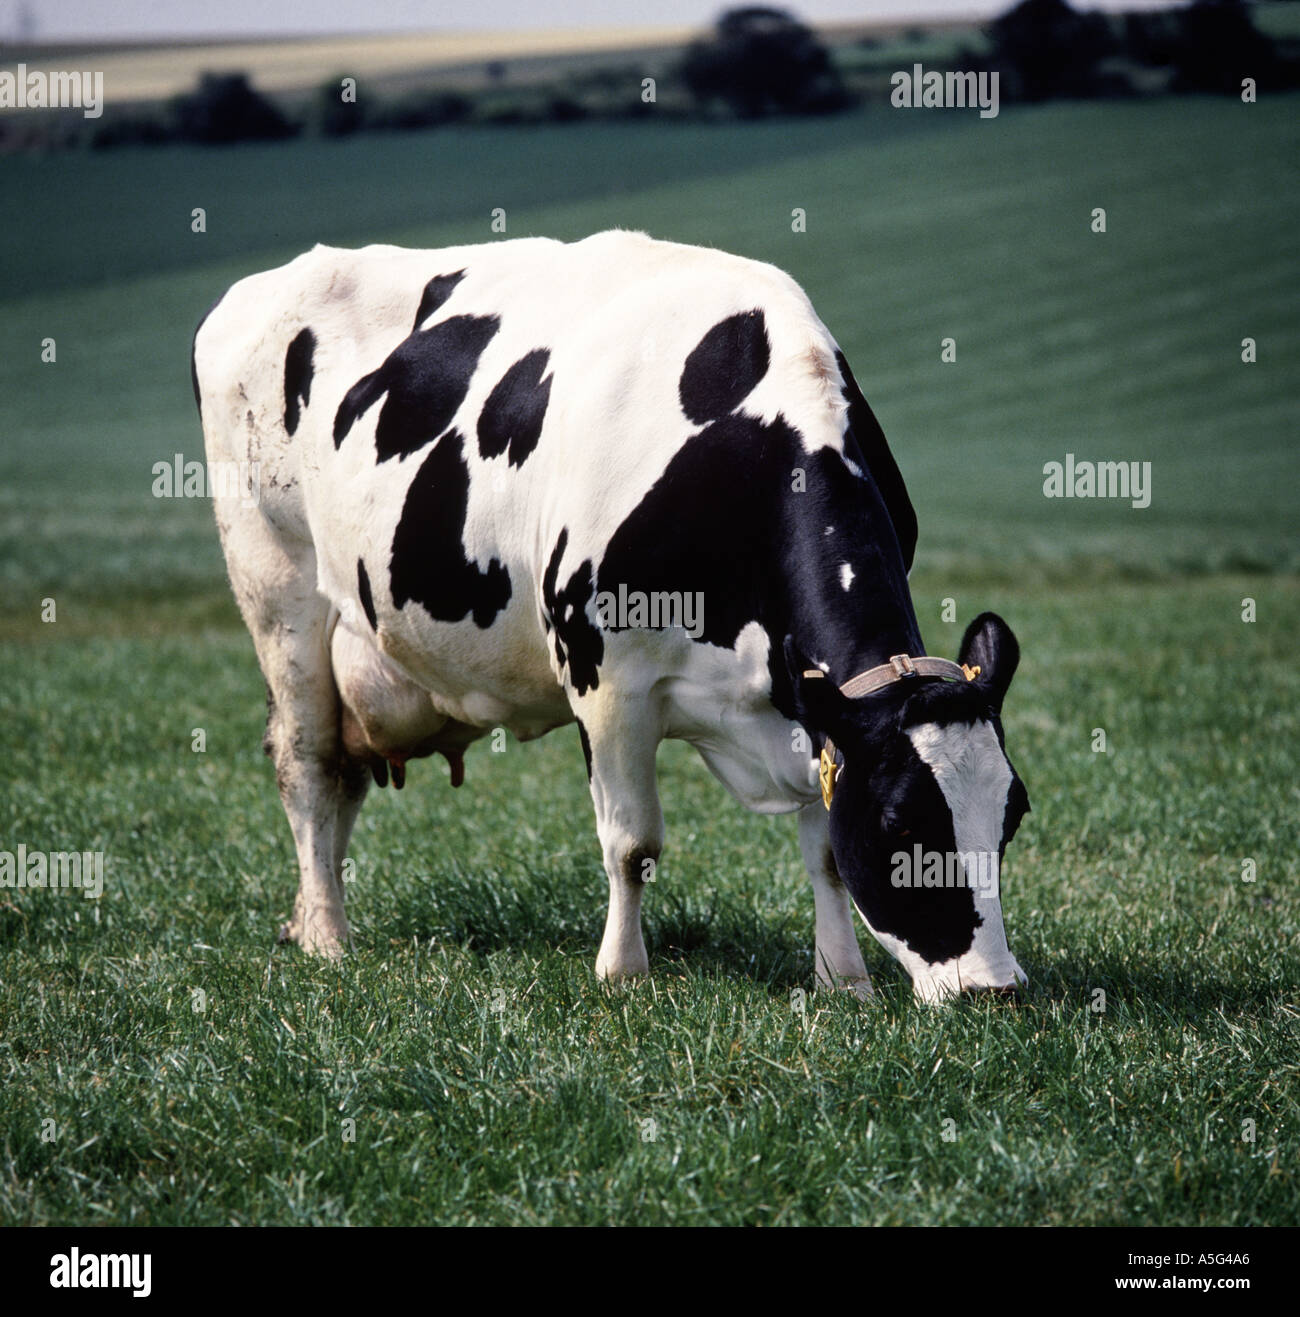 Holstein x Friesian dairy cow grazing on good spring grass Stock Photo